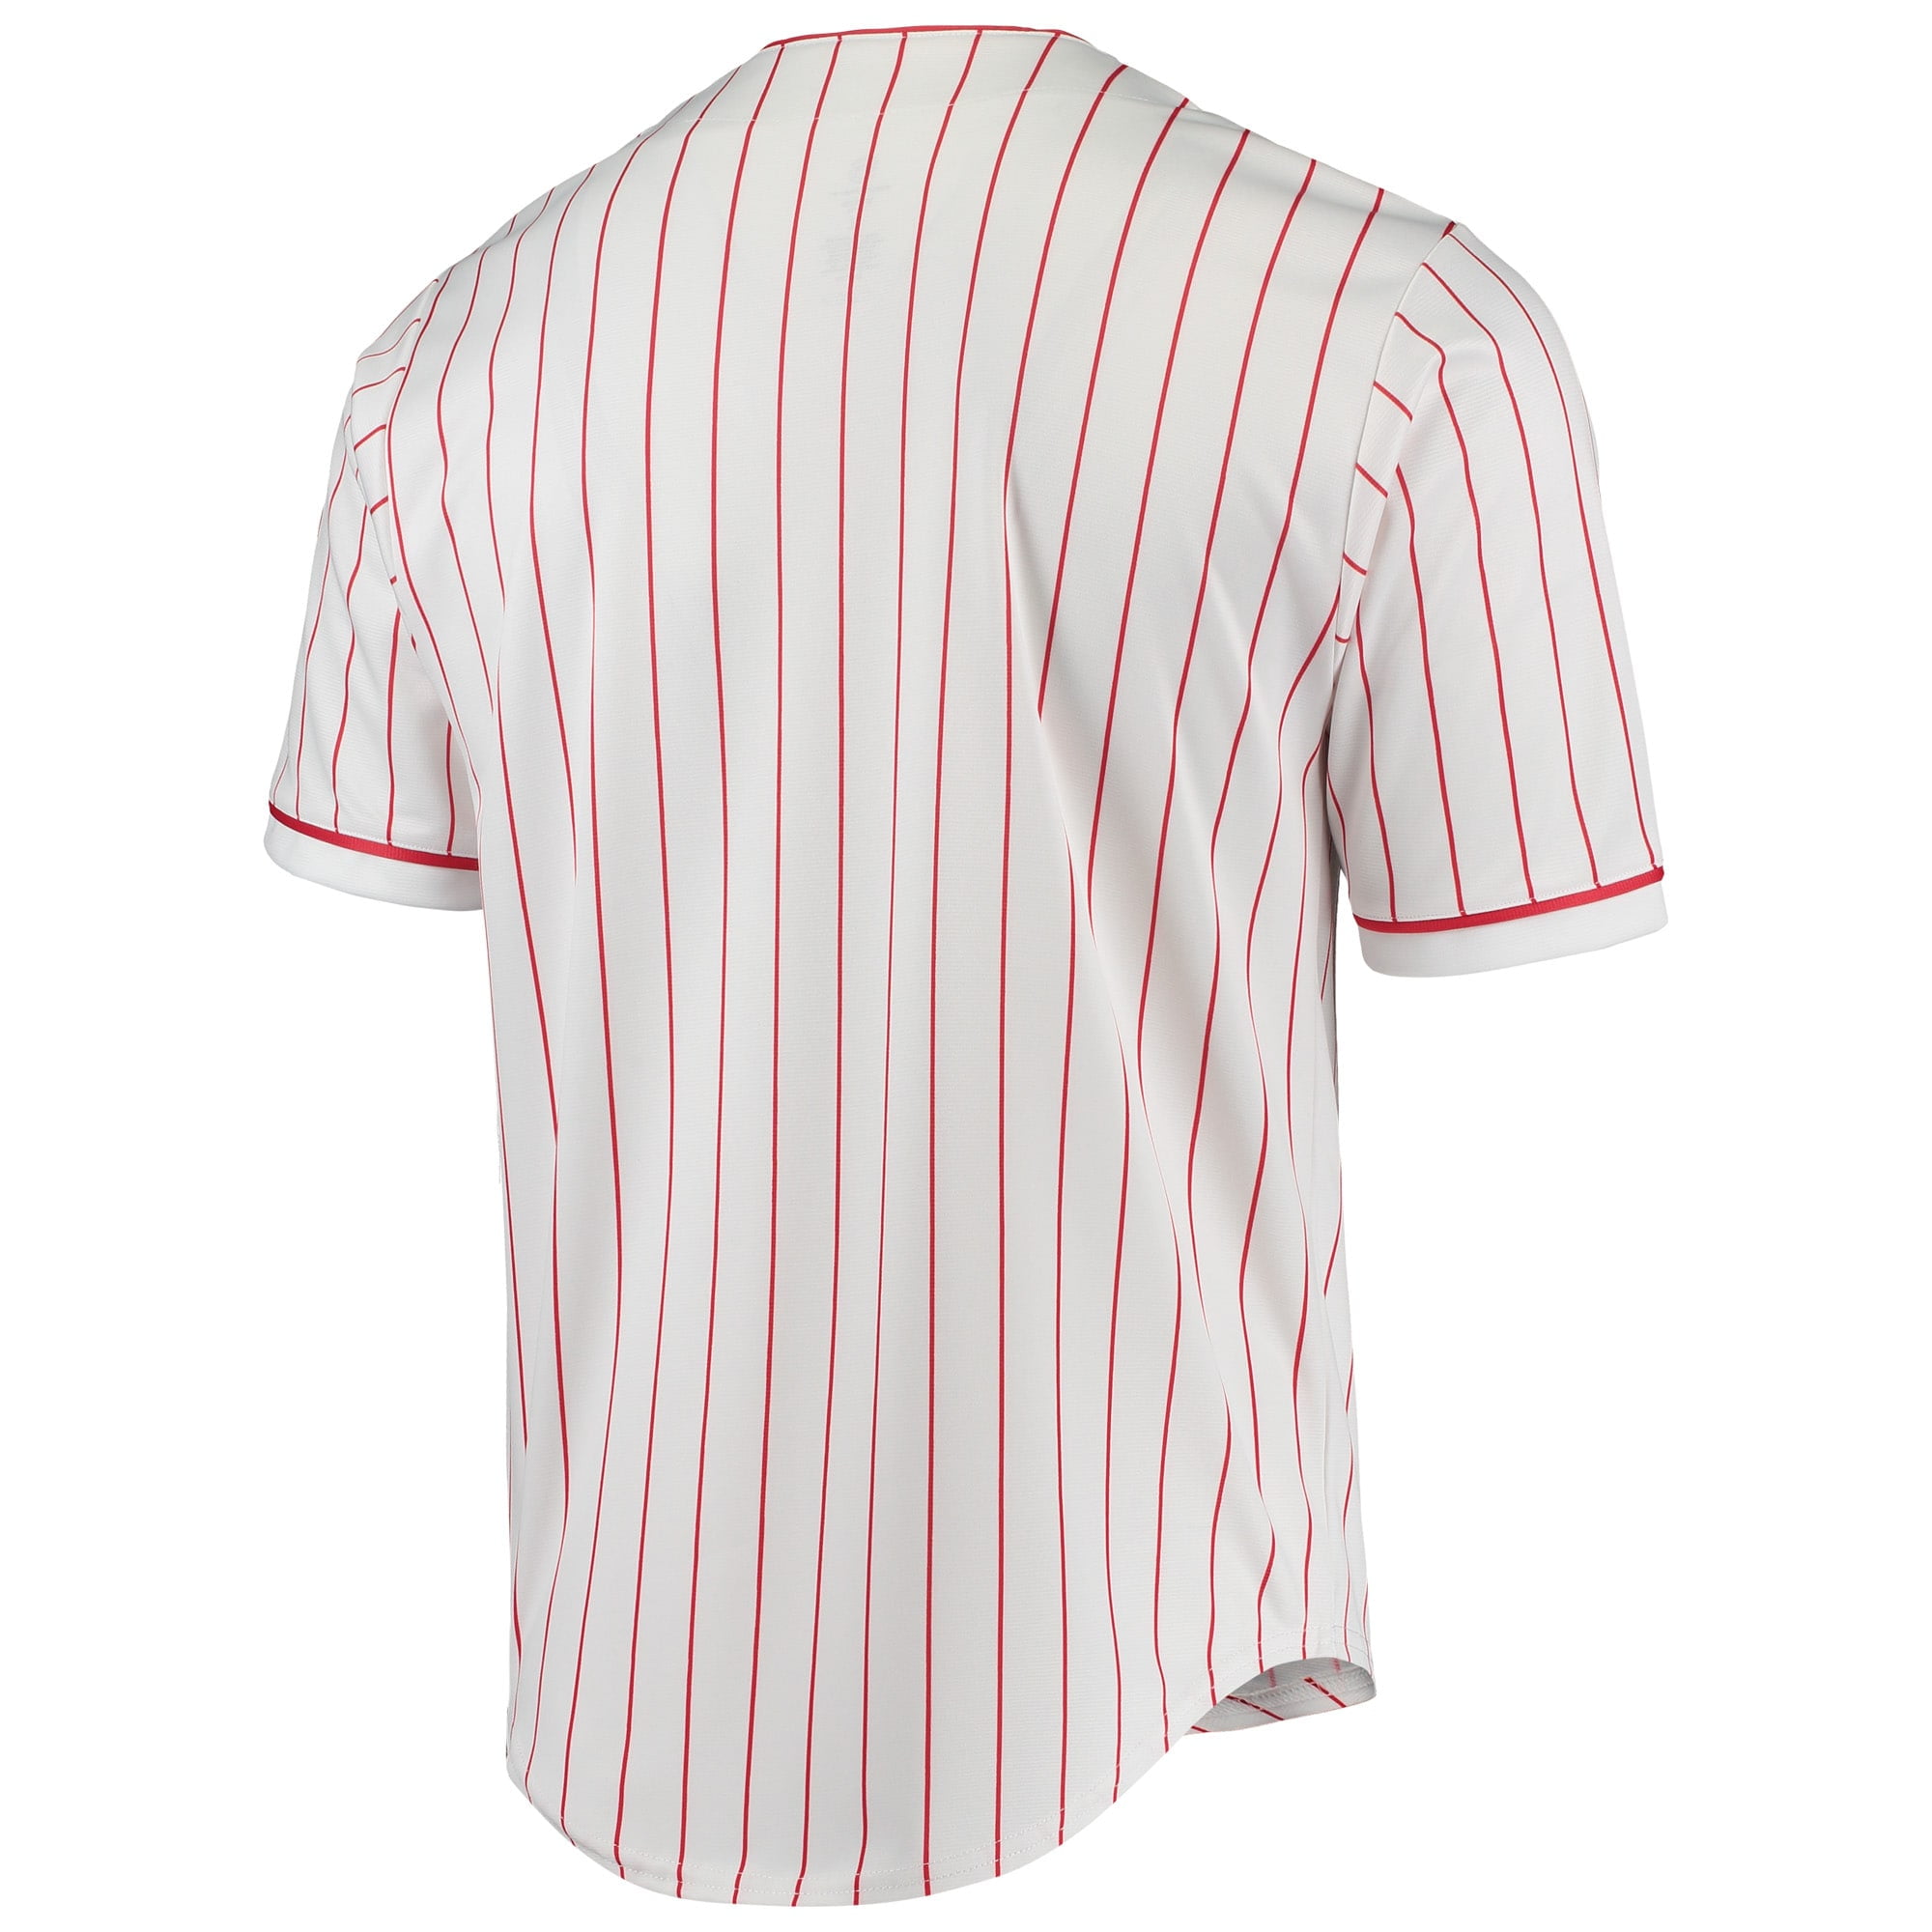 Cincinnati Reds 2020 Rebrand Uniform Set  Mlb uniforms, Cincinnati reds,  Pinstripe